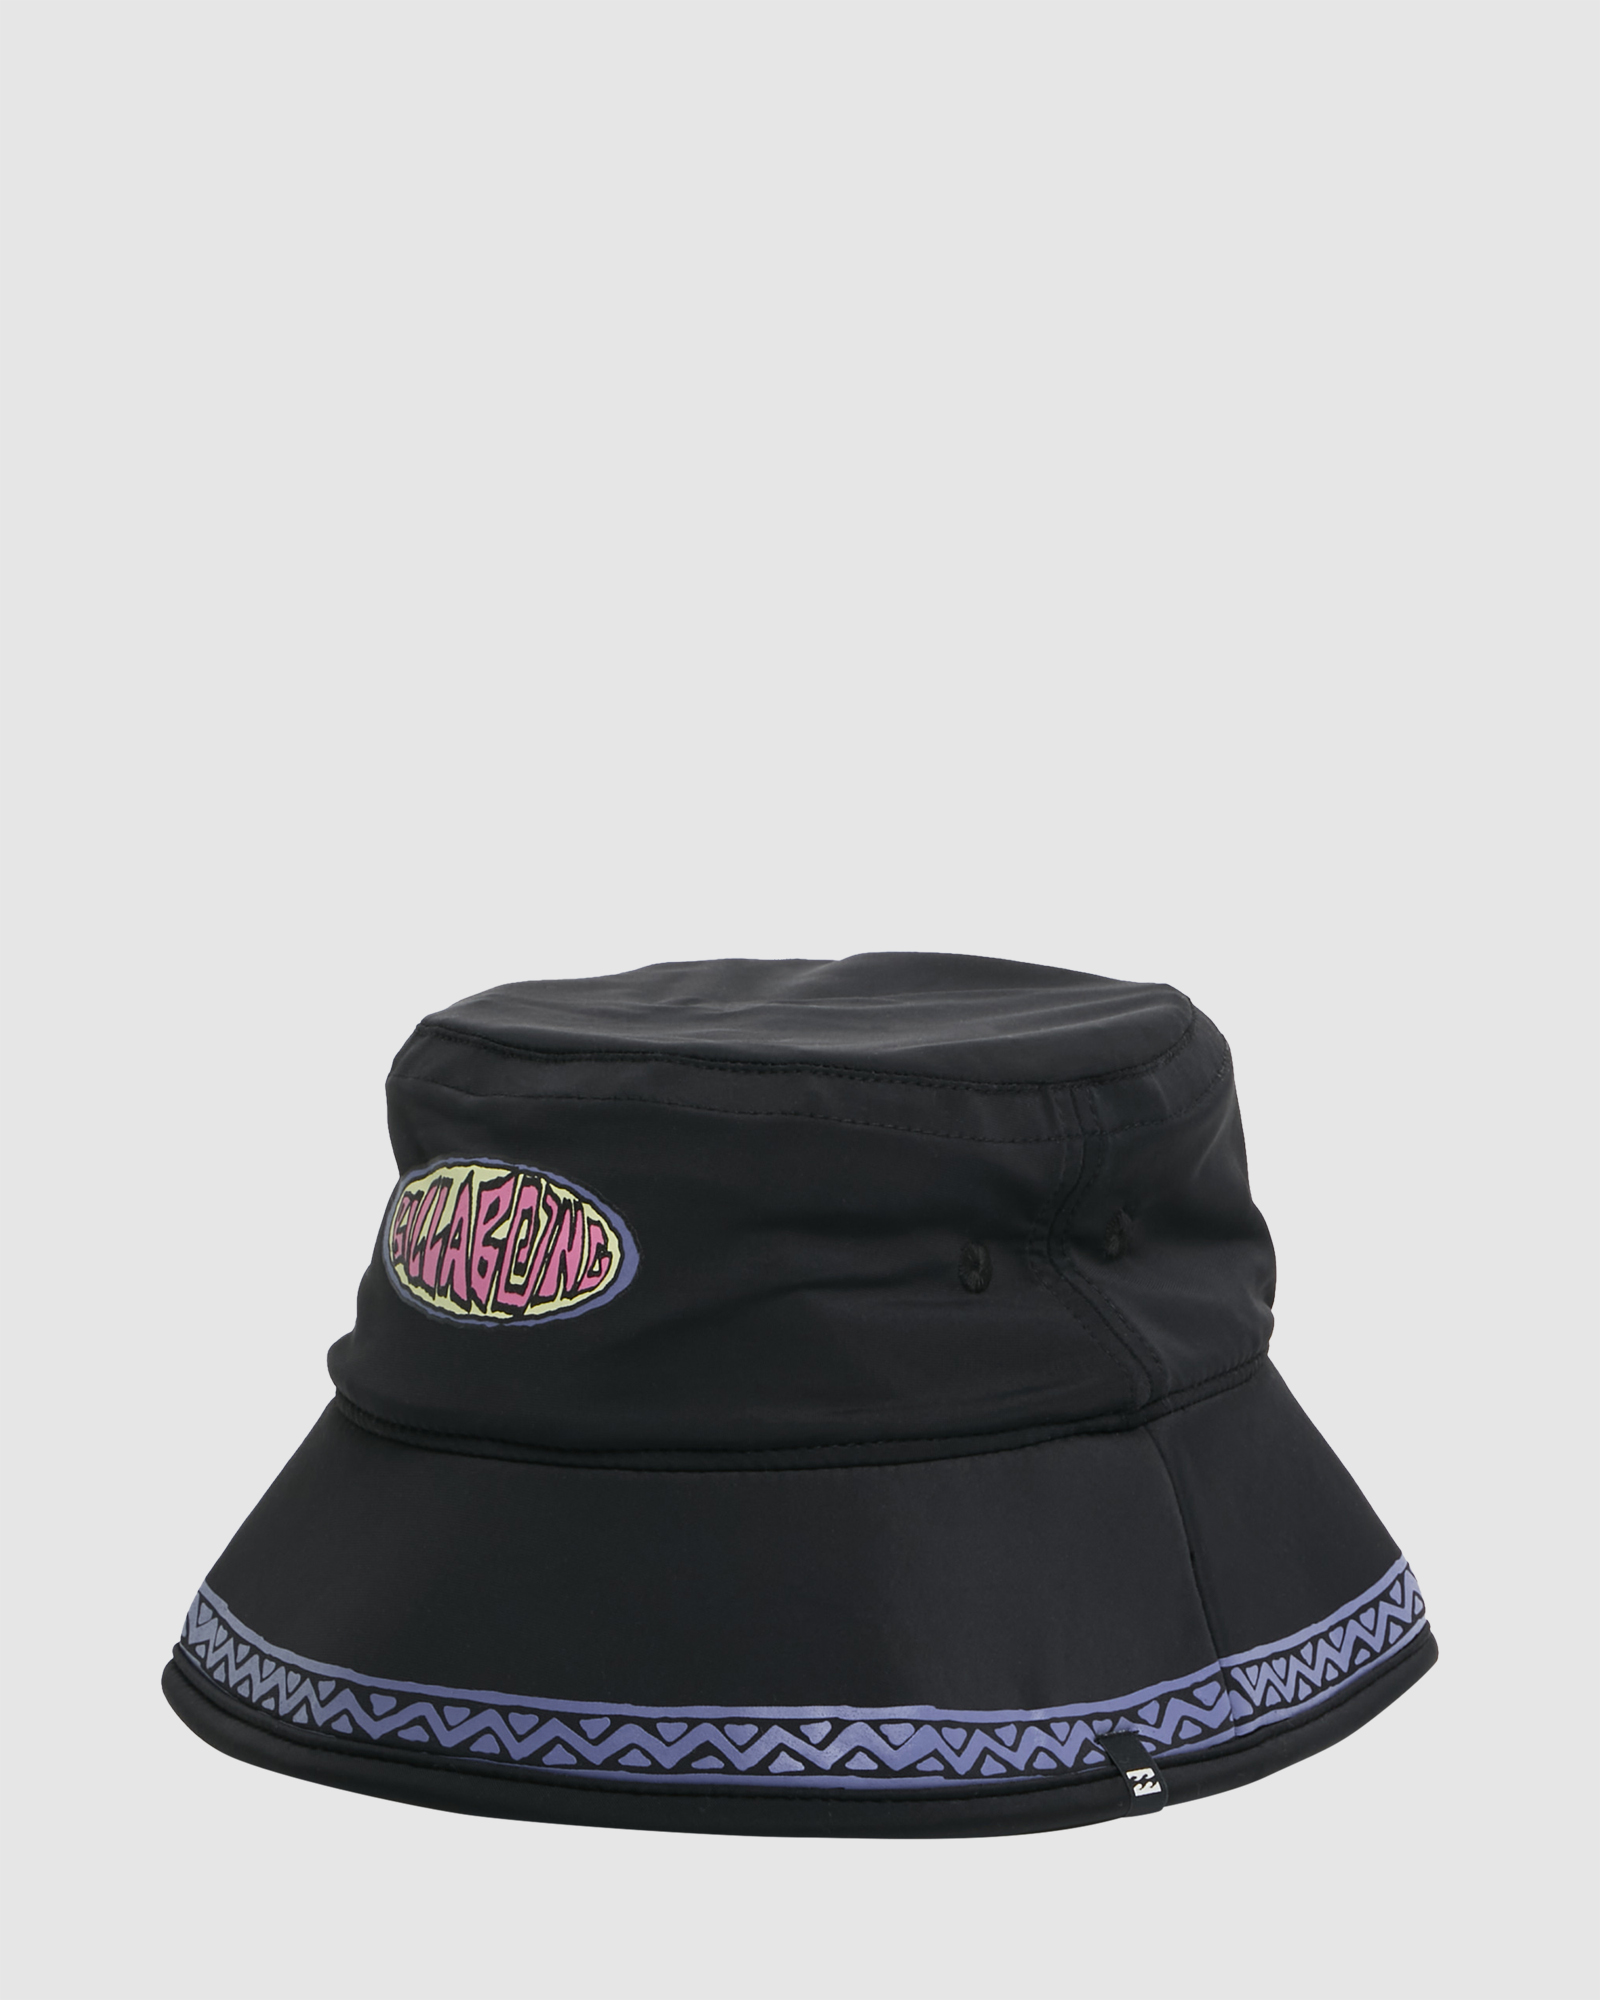 Billabong Groms Bucket Hat - Black